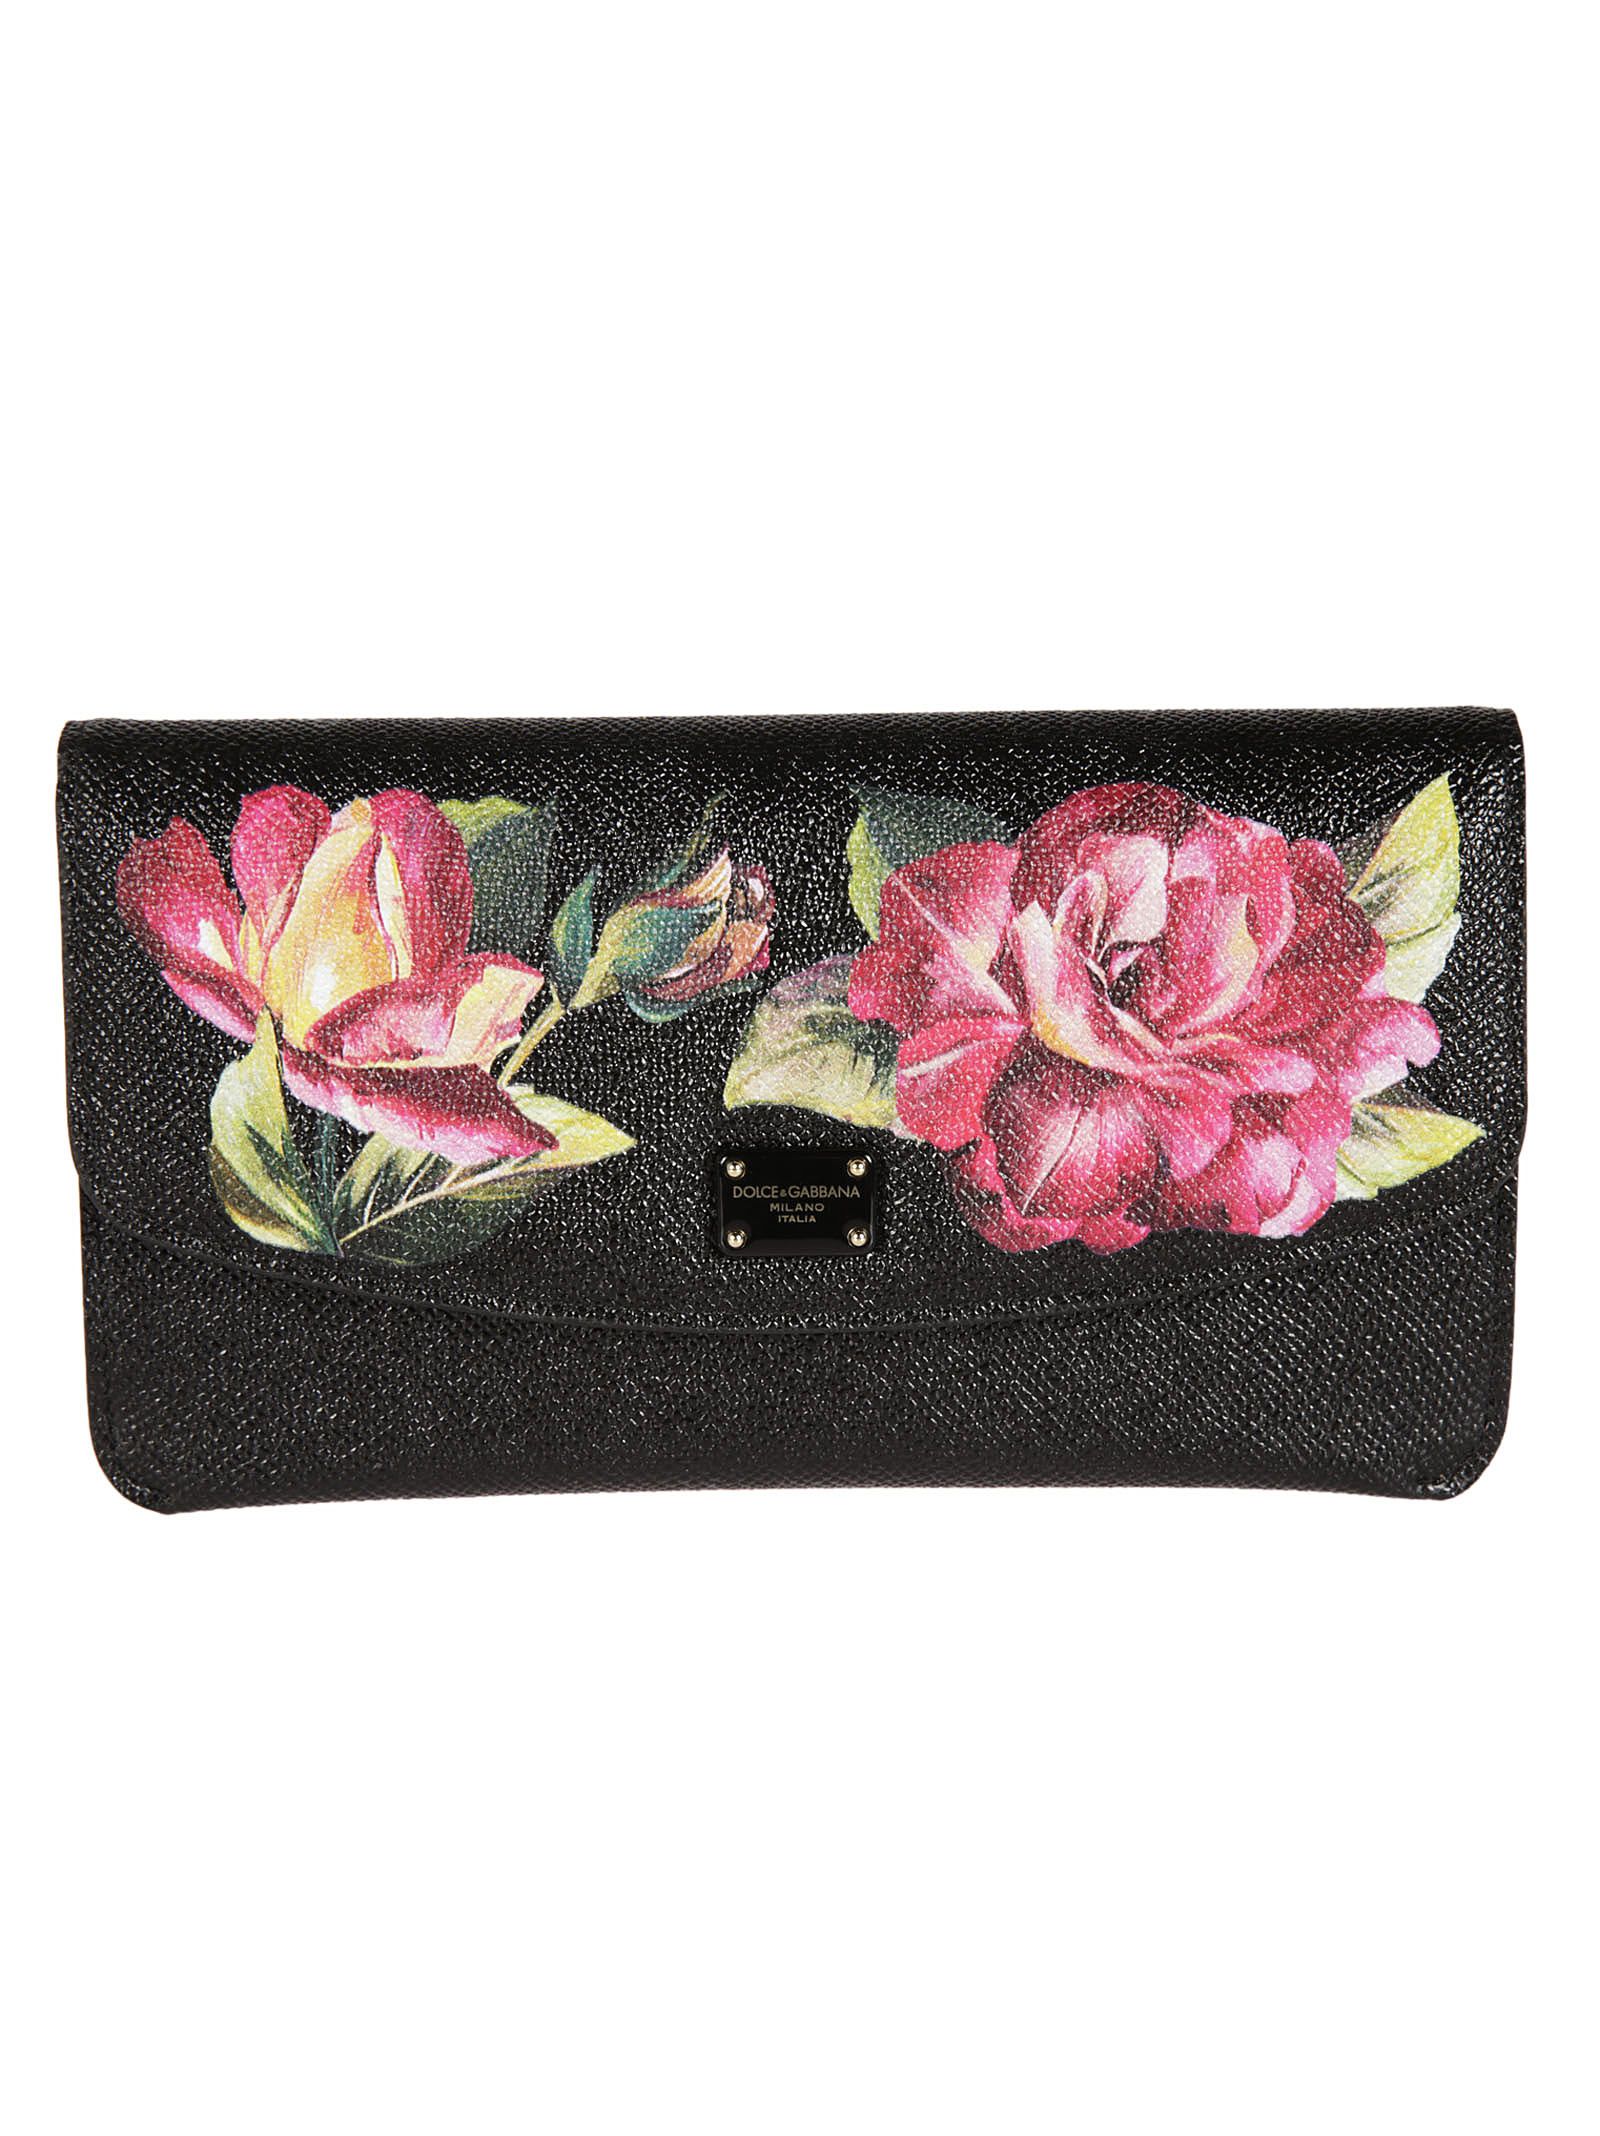 Dolce & Gabbana - Dolce & Gabbana Floral Print Wallet - Black, Women's ...